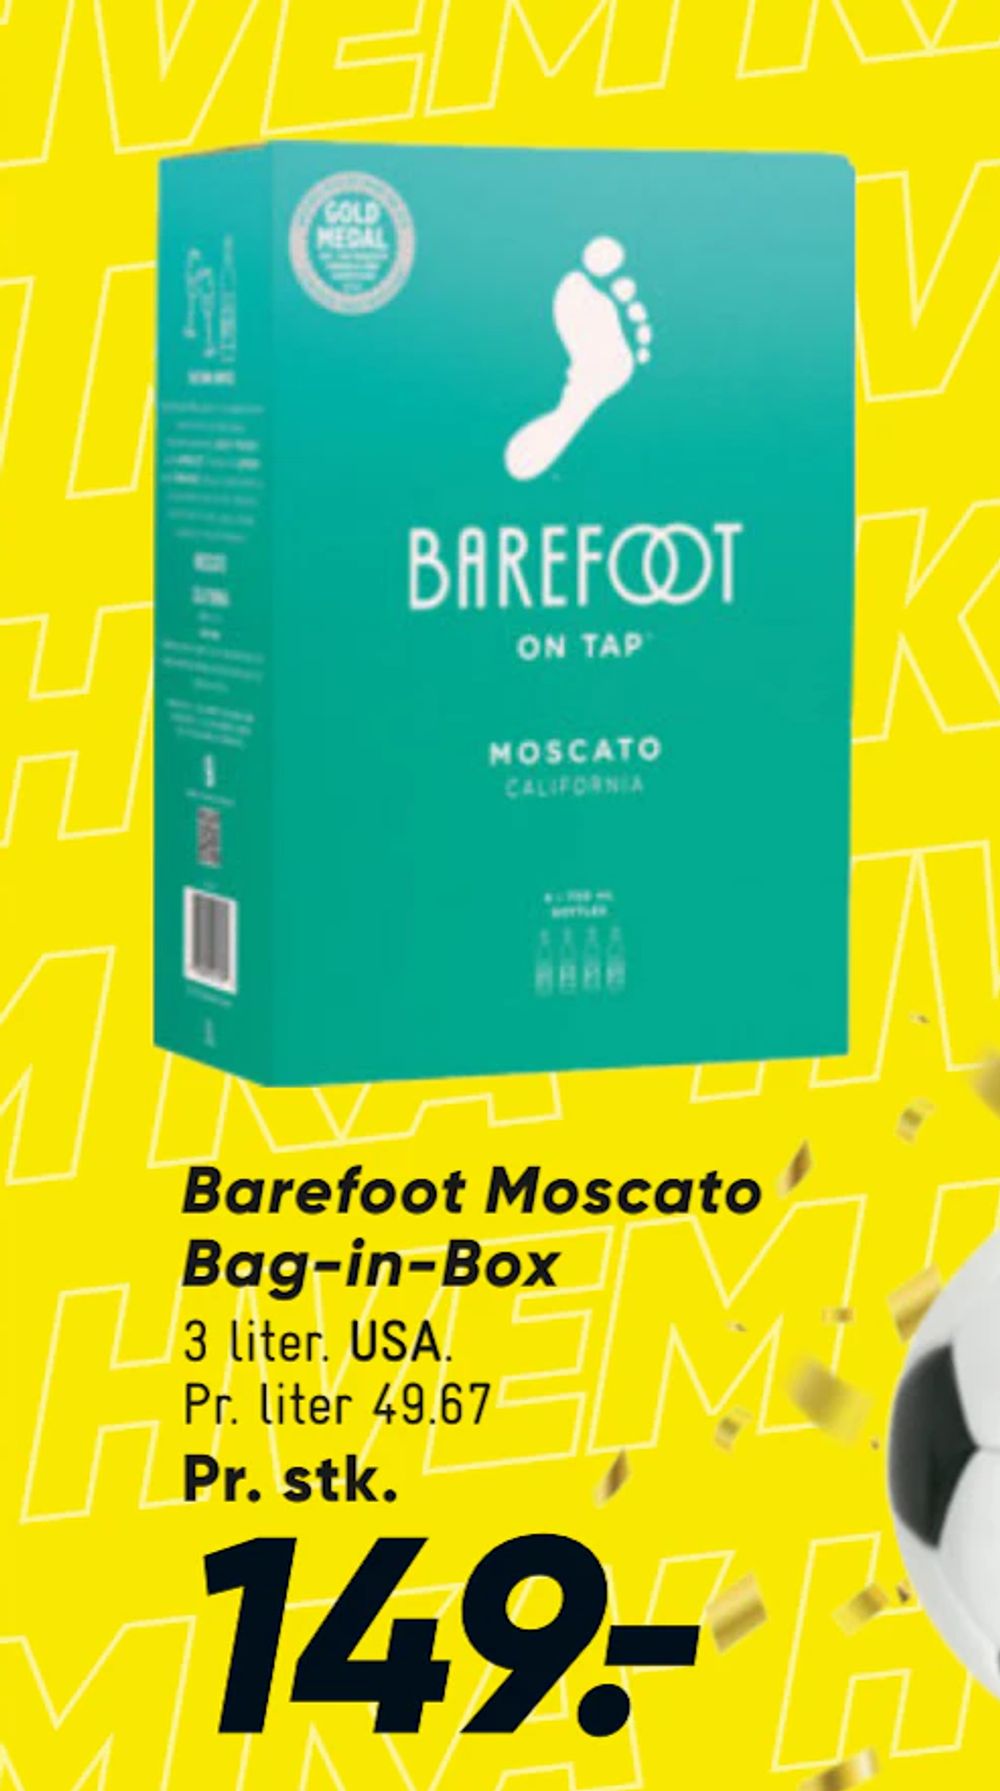 Tilbud på Barefoot Moscato Bag-in-Box fra Bilka til 149 kr.